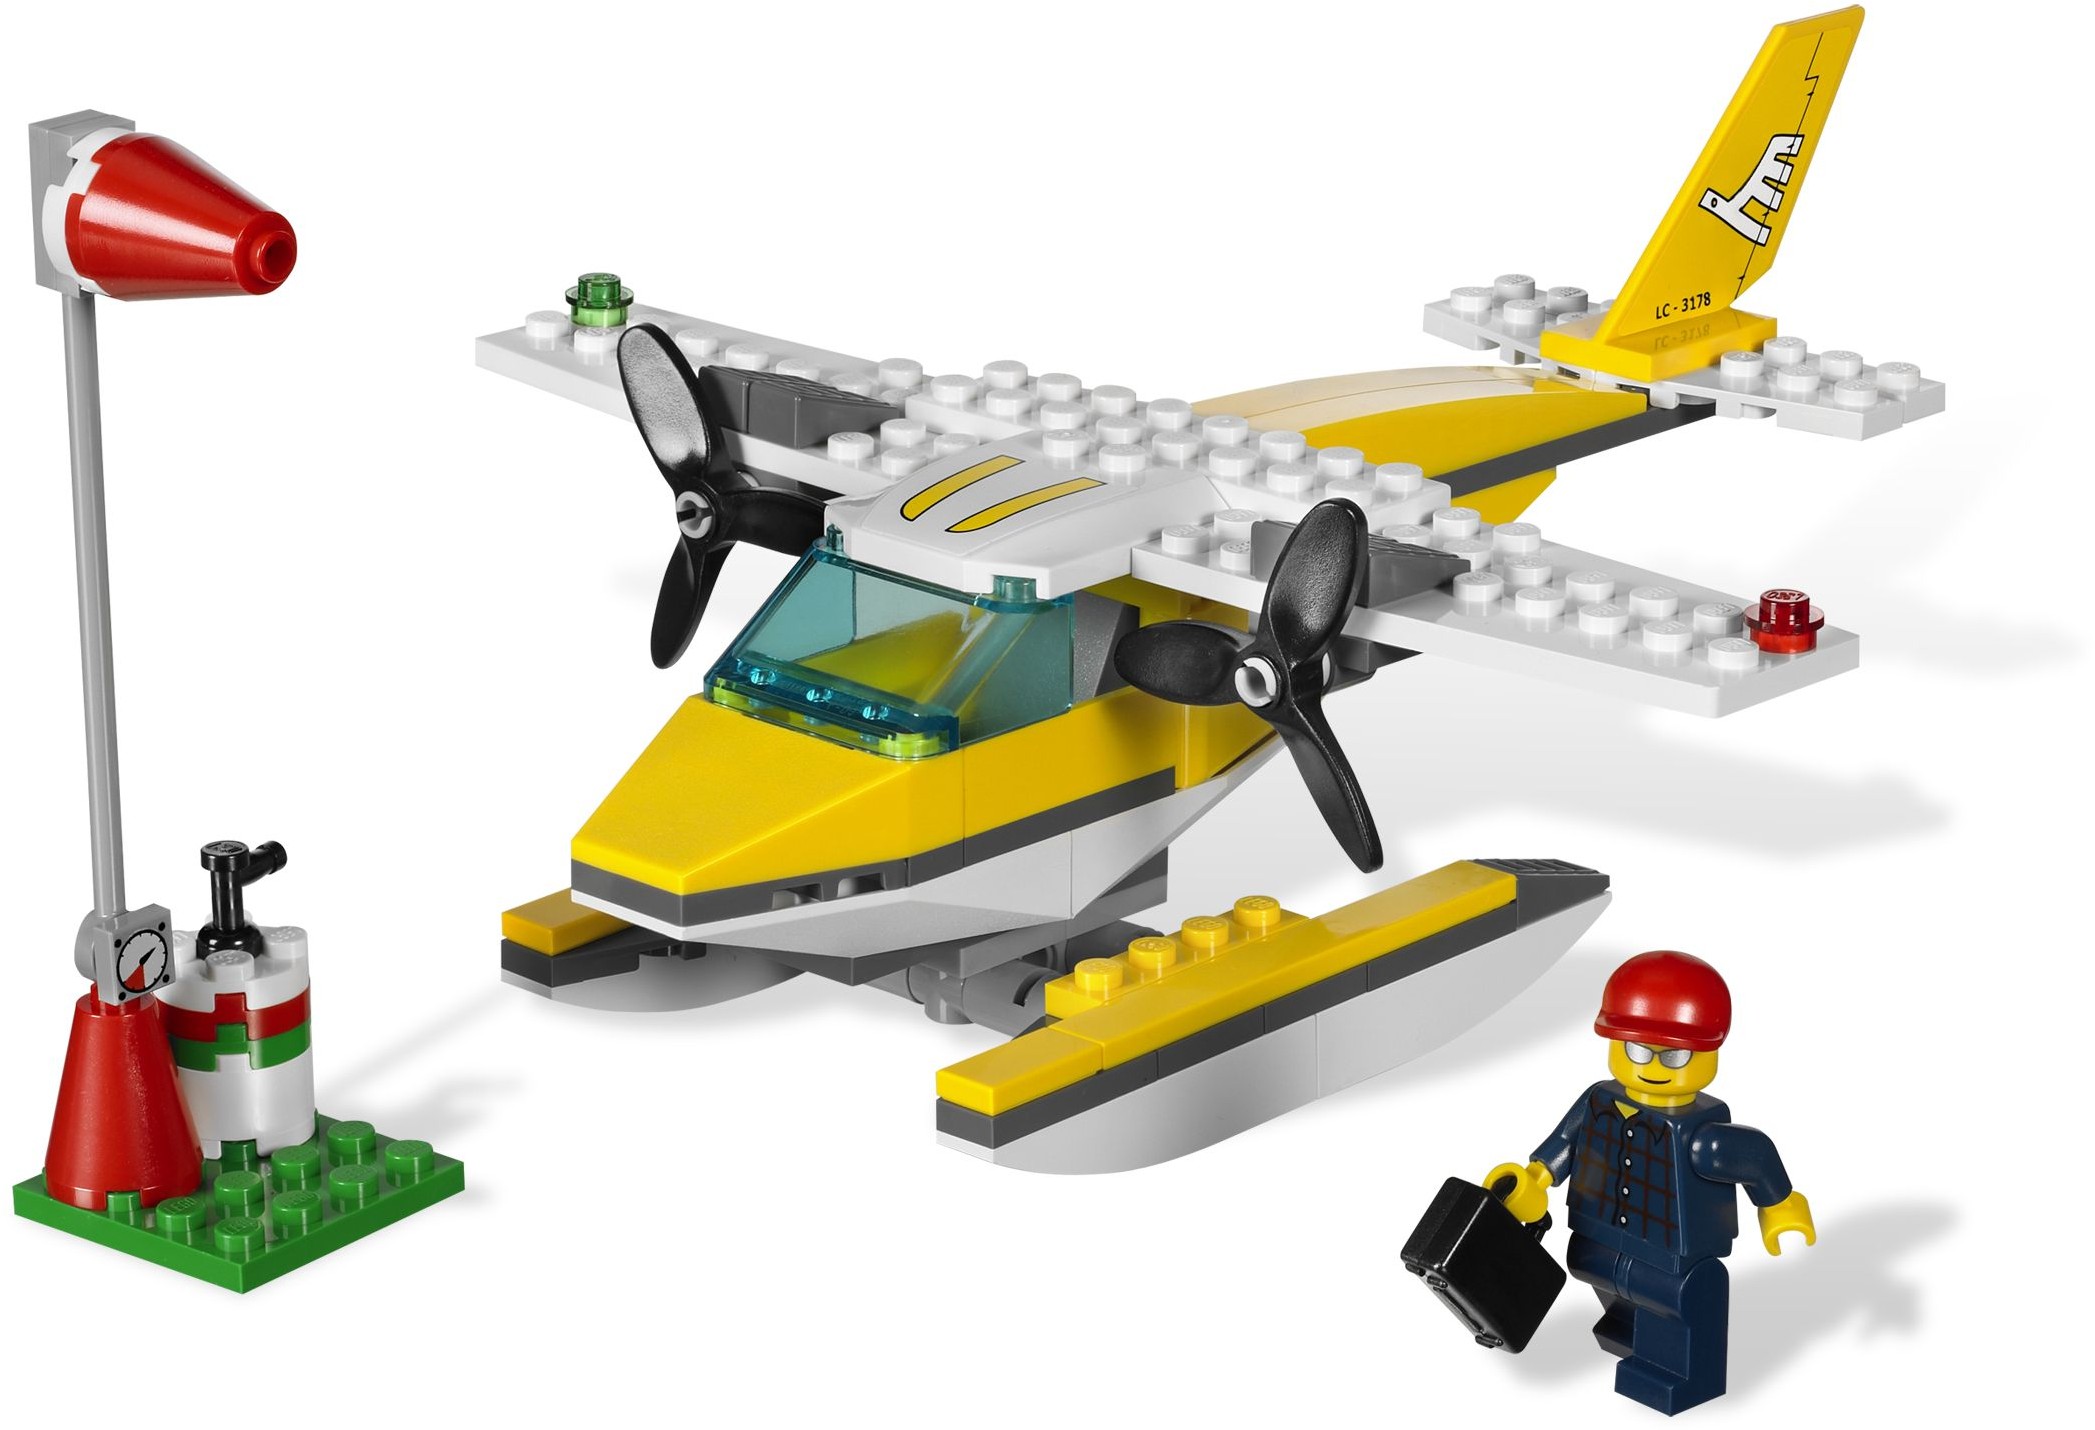 LEGO 2010 Brickset